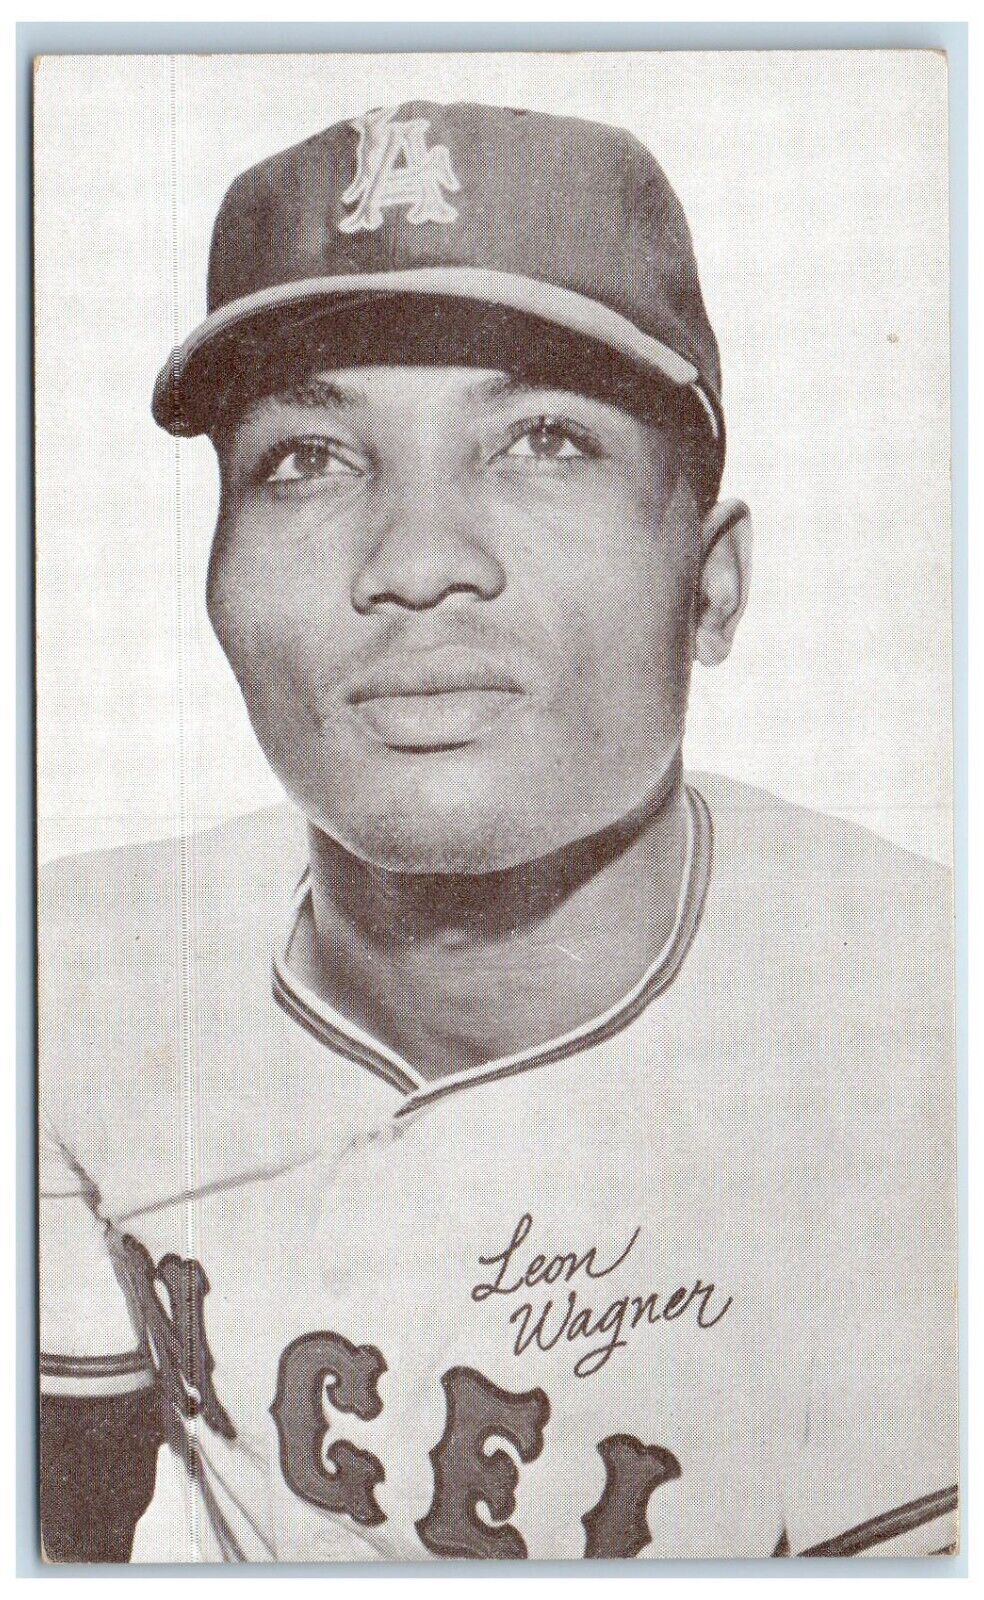 c1950's Leon Wagner Top Baseball Player Sports Exhibit Arcade Card